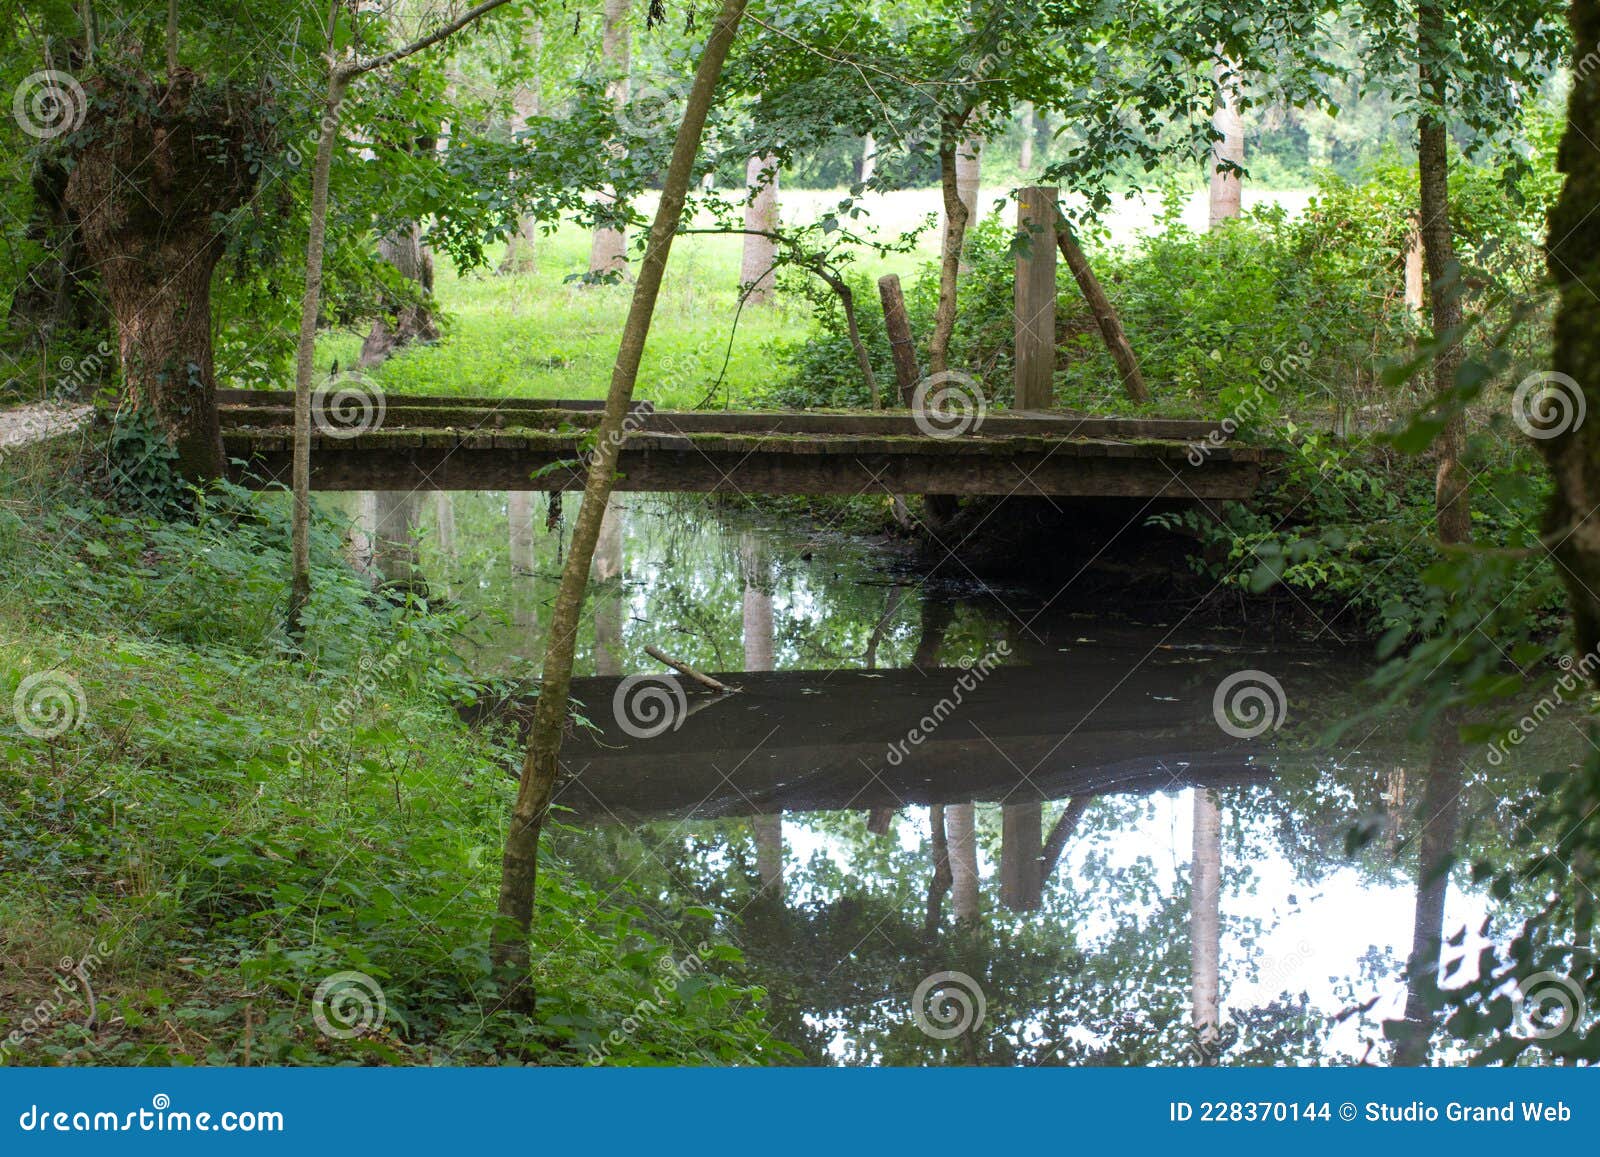 bucolic wooden bridge and pollarded ash trees reflecting on marsh